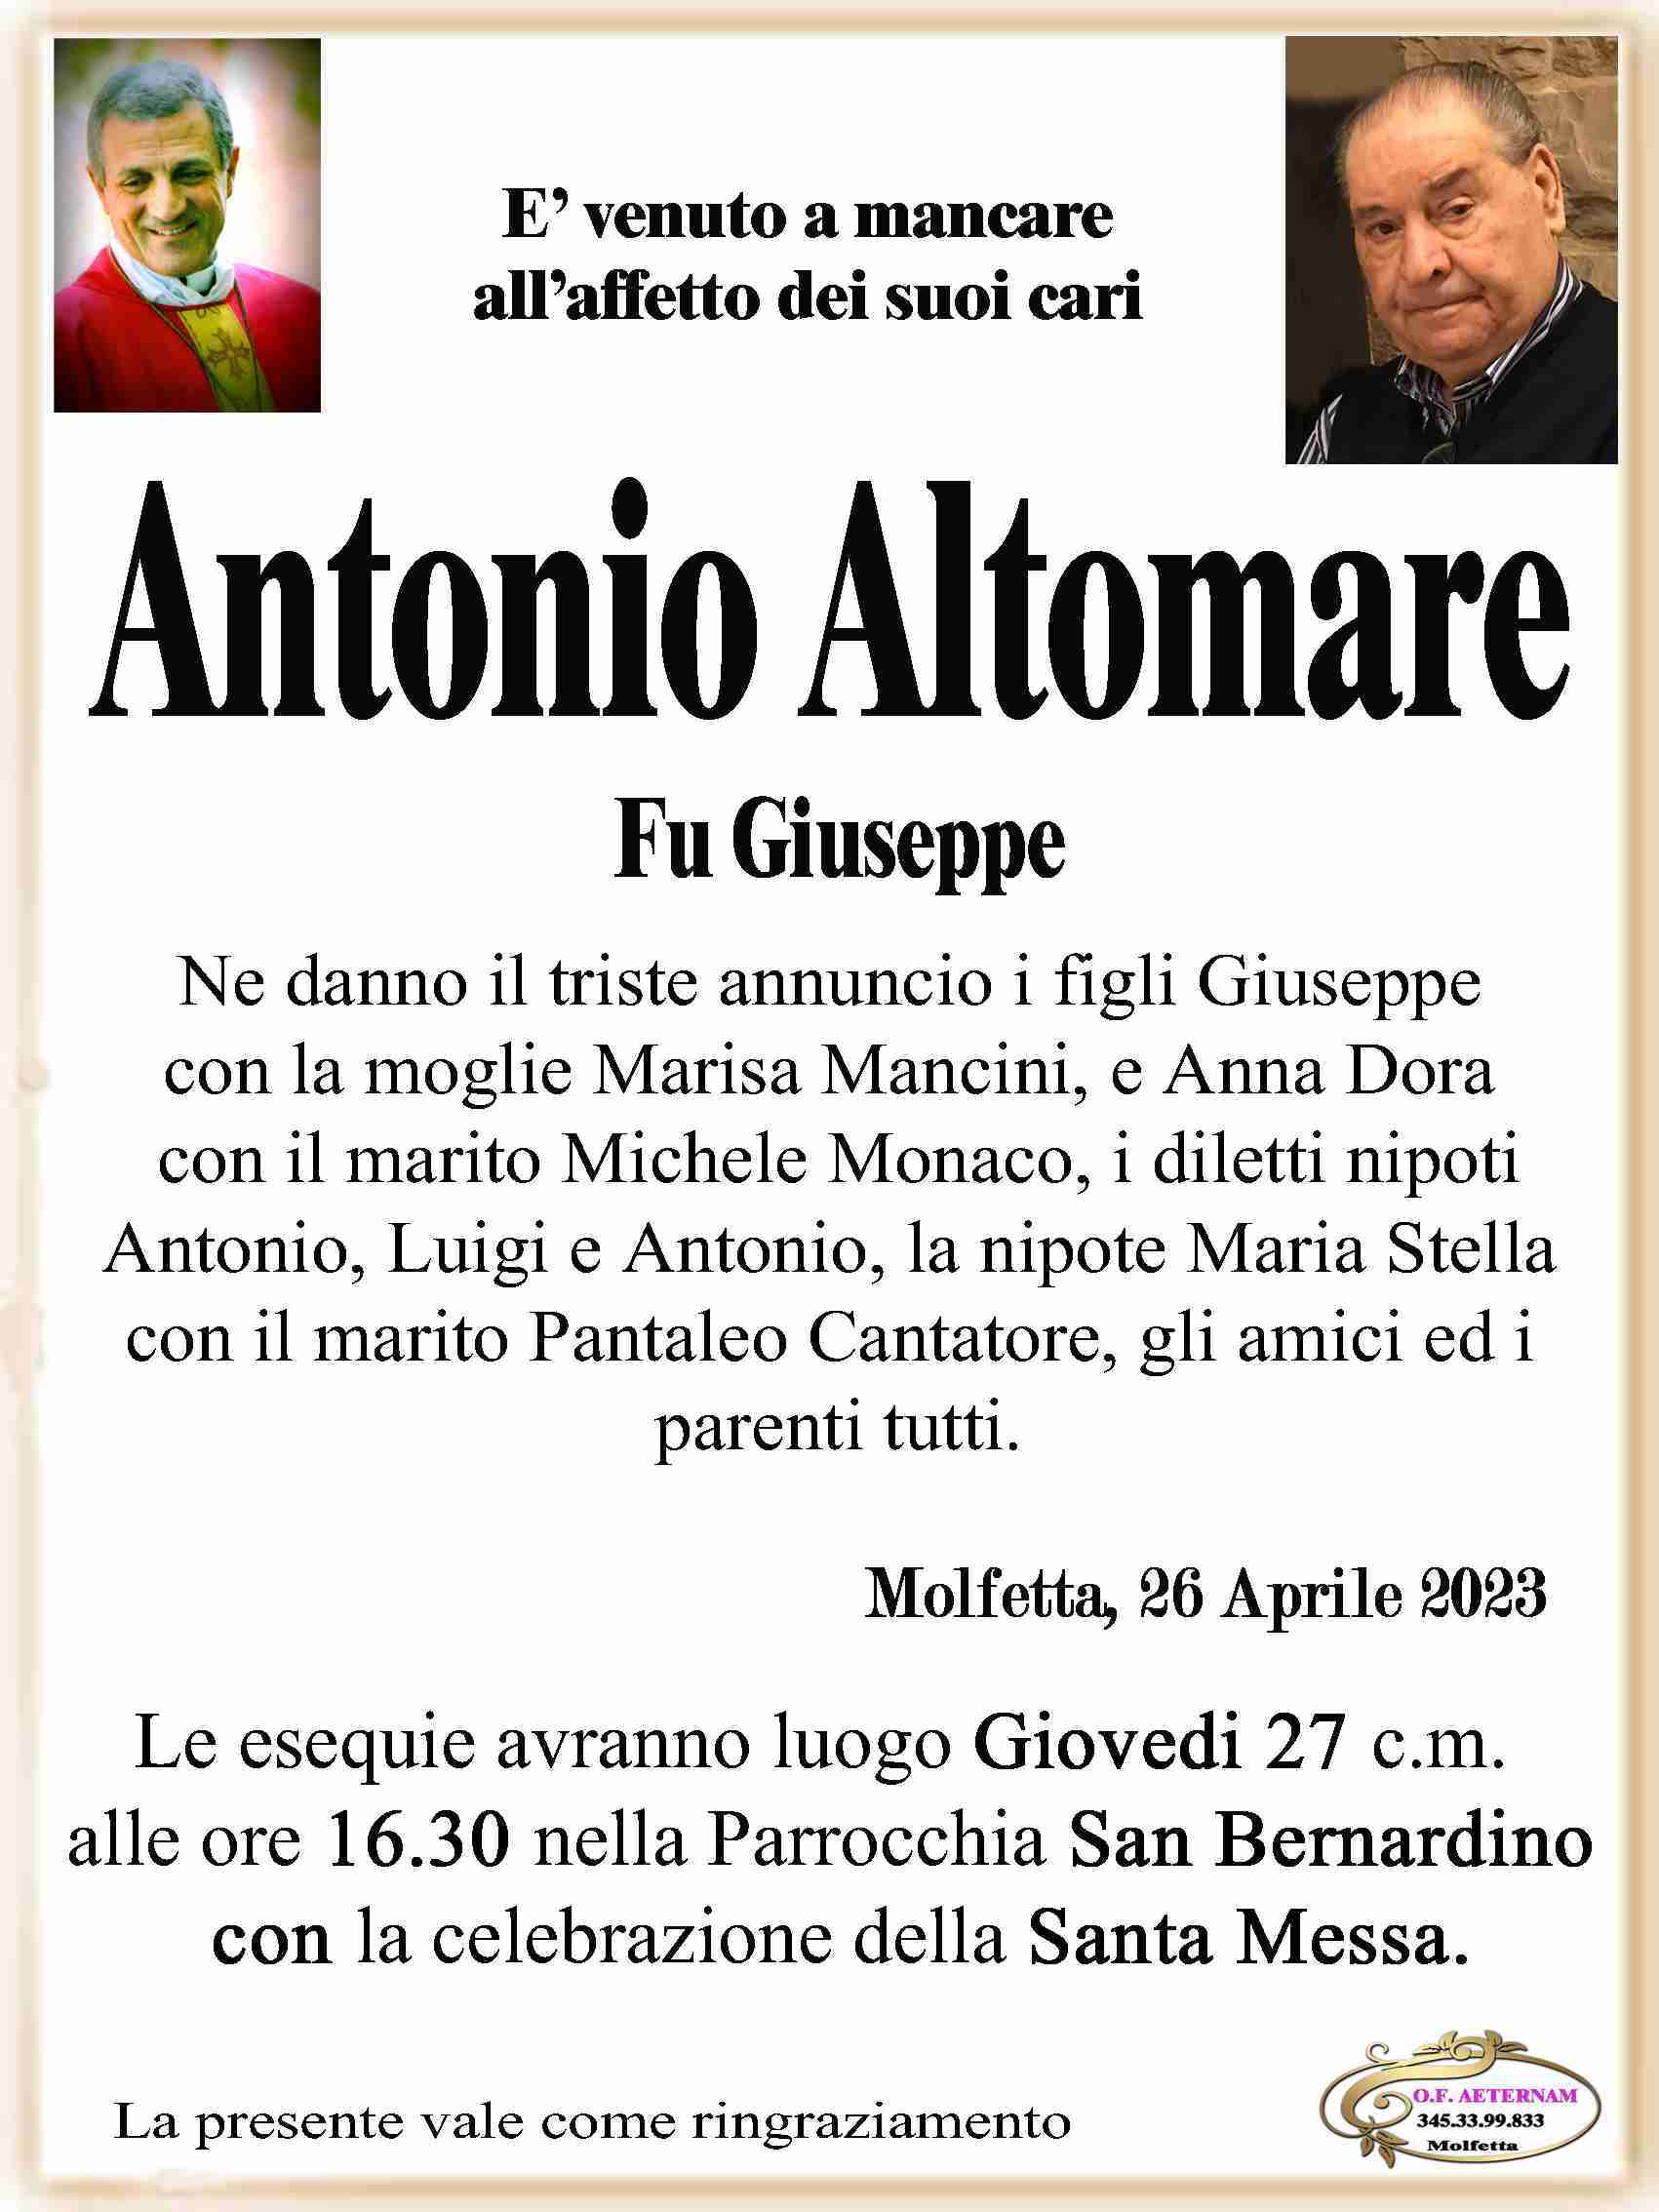 Antonio Altomare